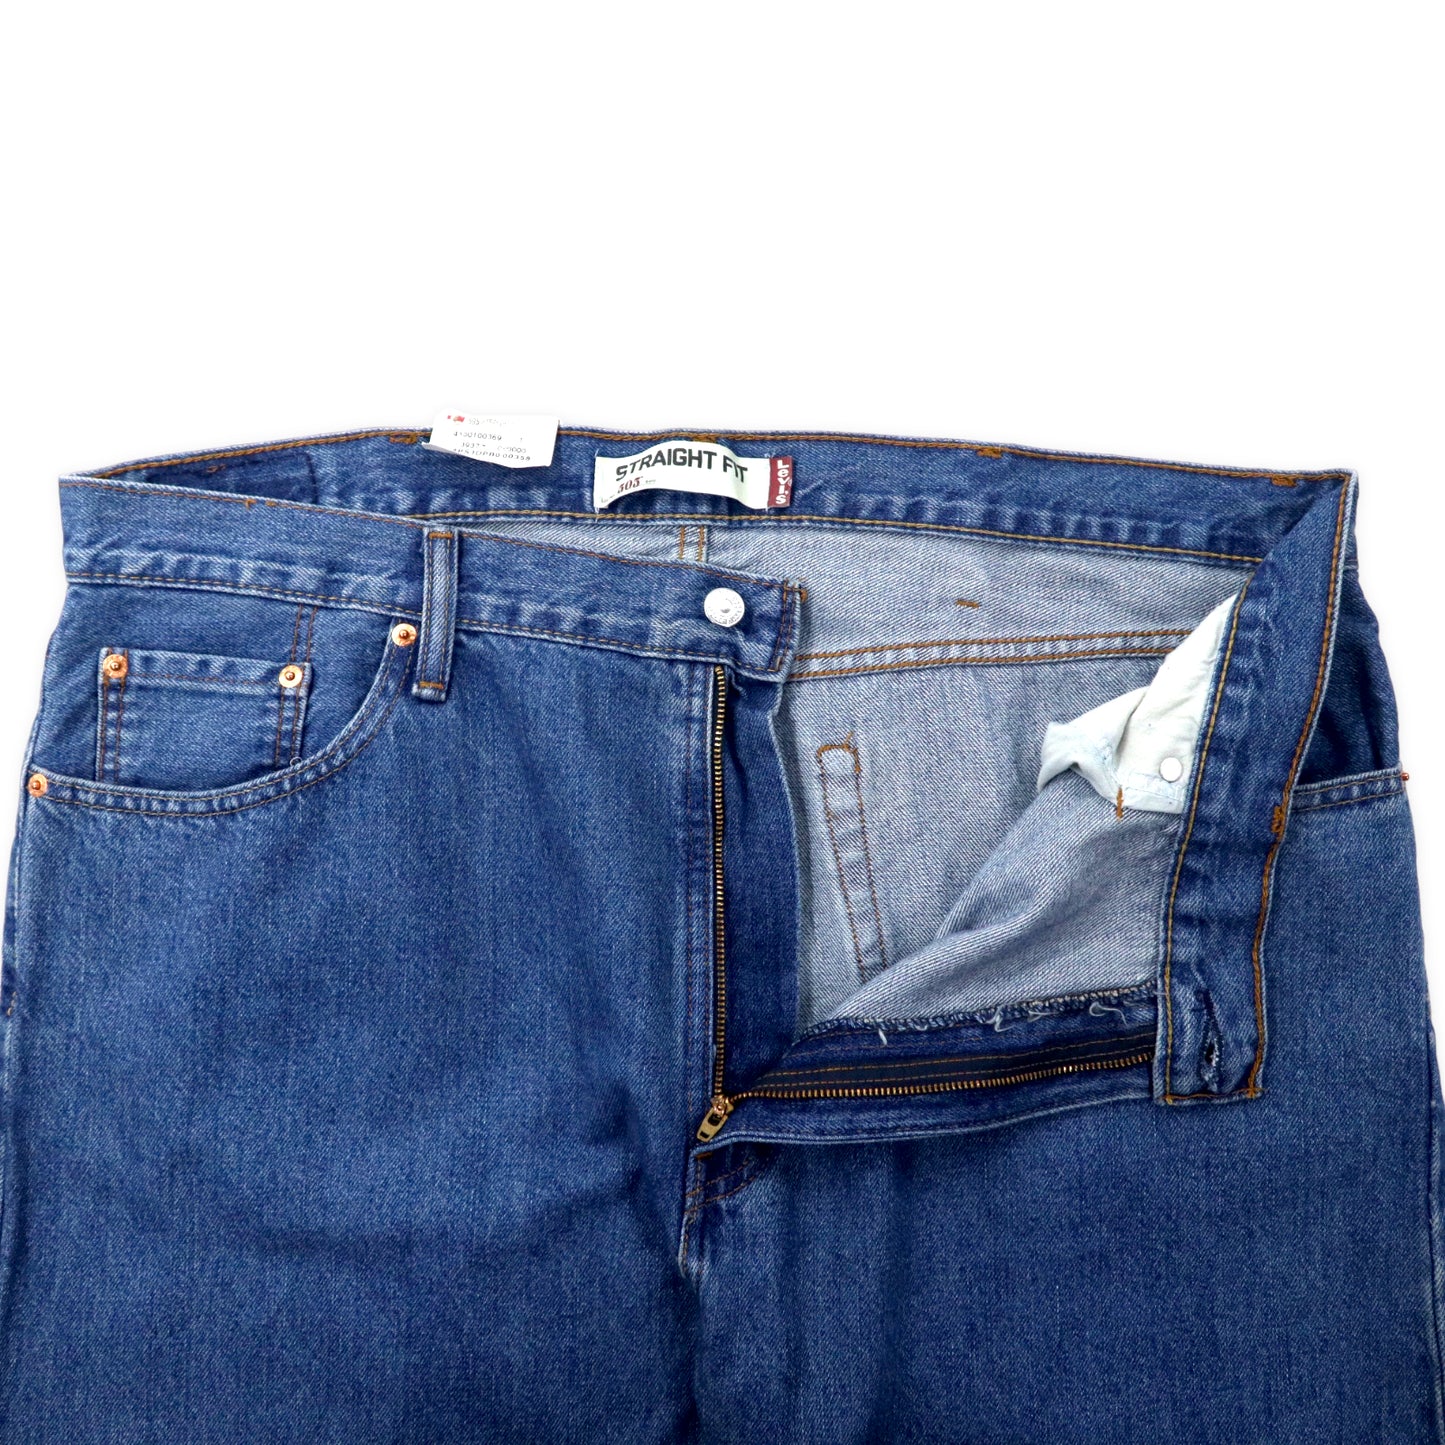 Levi's 505 Straight Fit Denim PANTS 40 Blue 505-4891 Big Size Unused